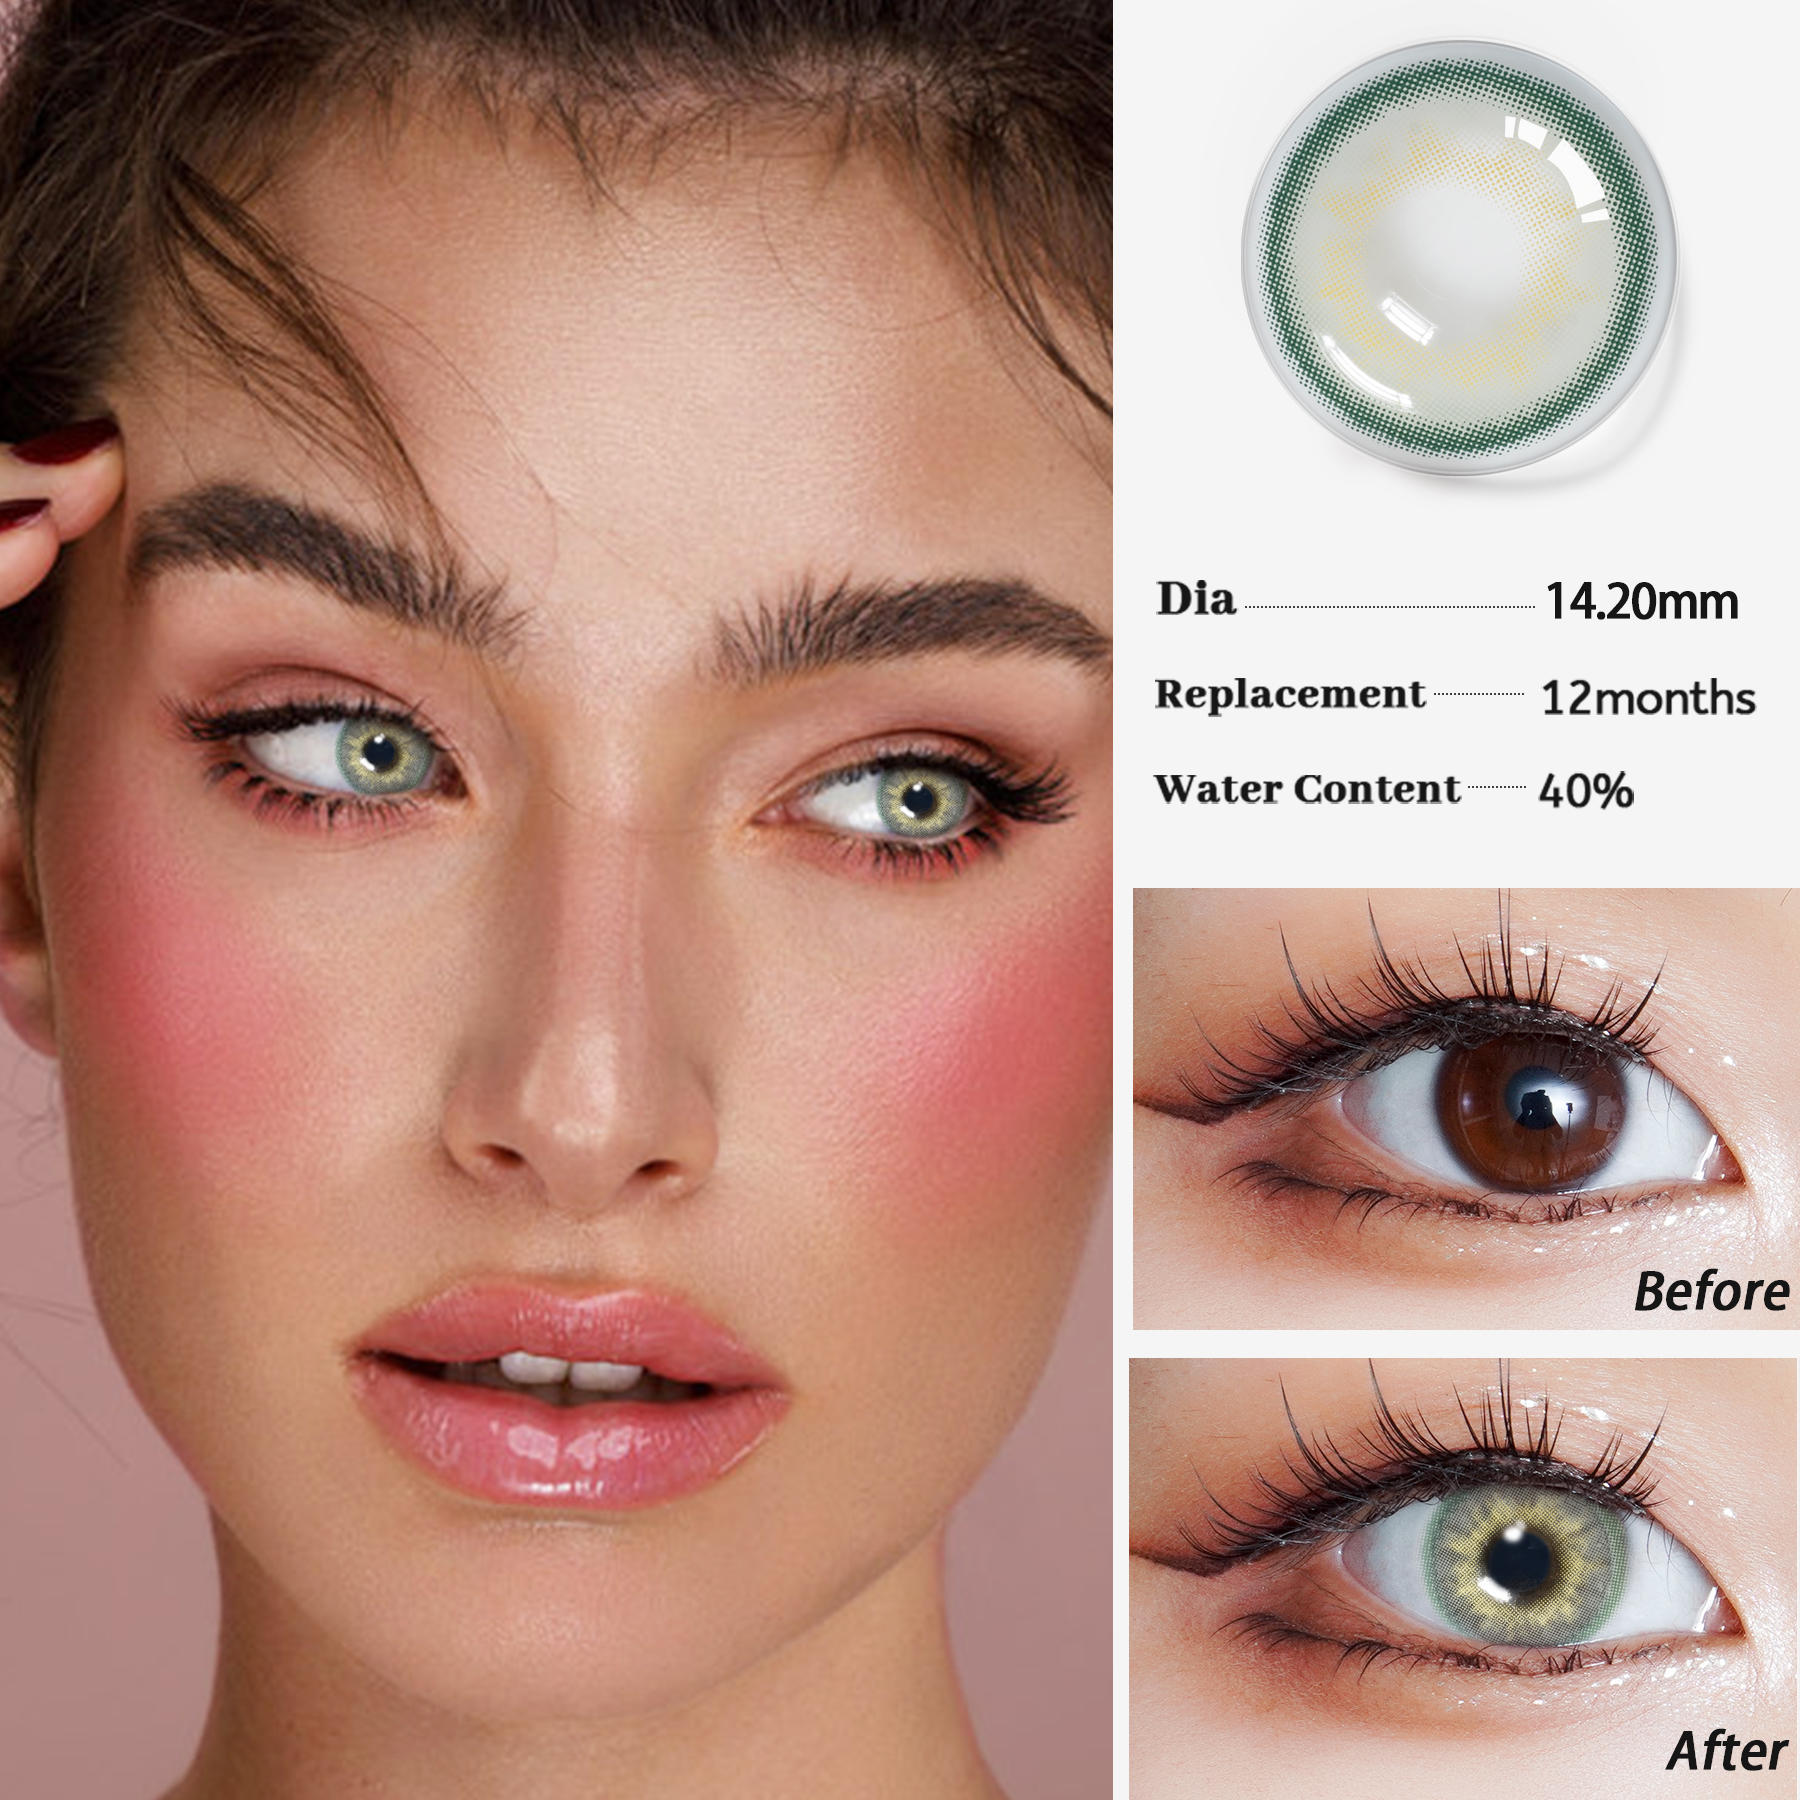 MARIA လက်လီ စက်ရုံမှ အလှကုန် အဆက်အသွယ် မှန်ဘီလူး စျေးနှုန်းချိုသာစွာဖြင့် ညွှန်းမဟုတ်သော မျက်ကပ်မှန် Soft Lens Aurora အညိုရောင် မှန်ဘီလူး